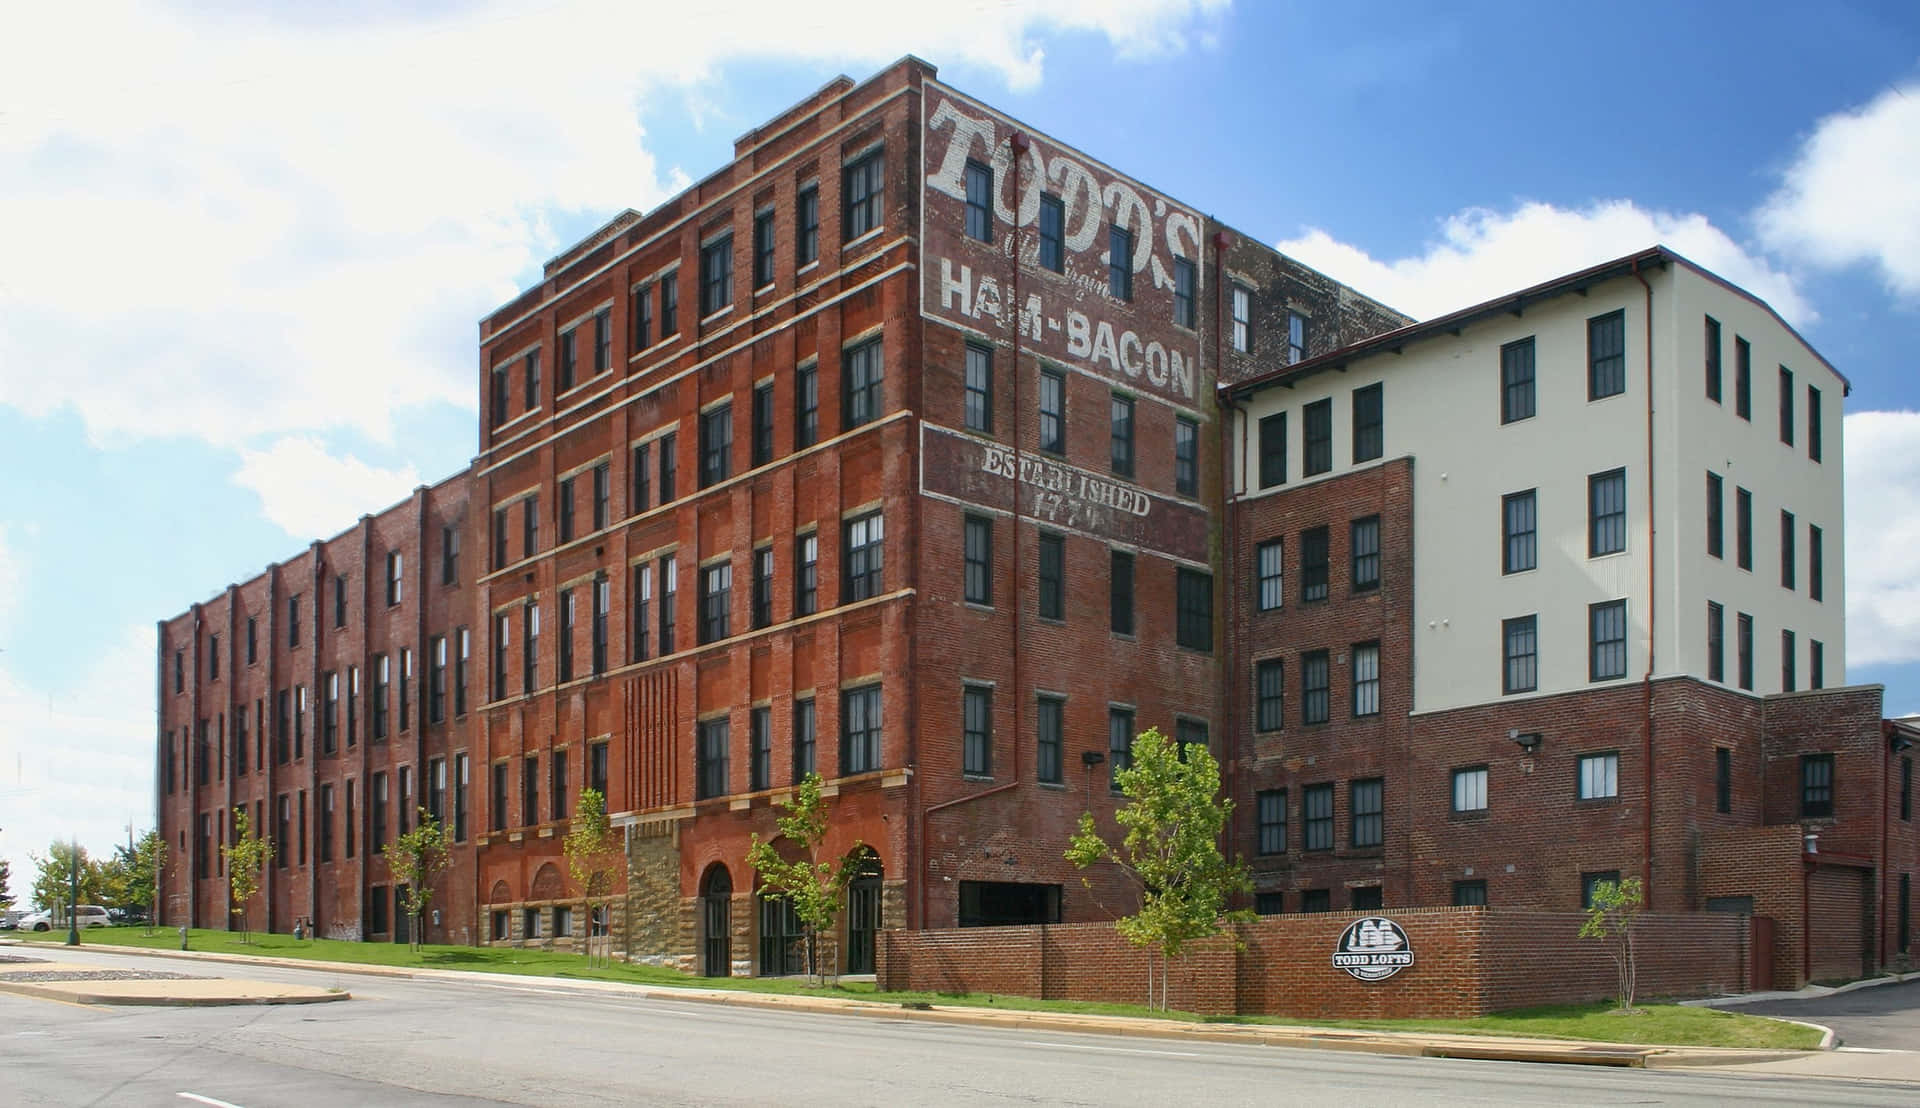 Historic Richmond Industrial Building Wallpaper